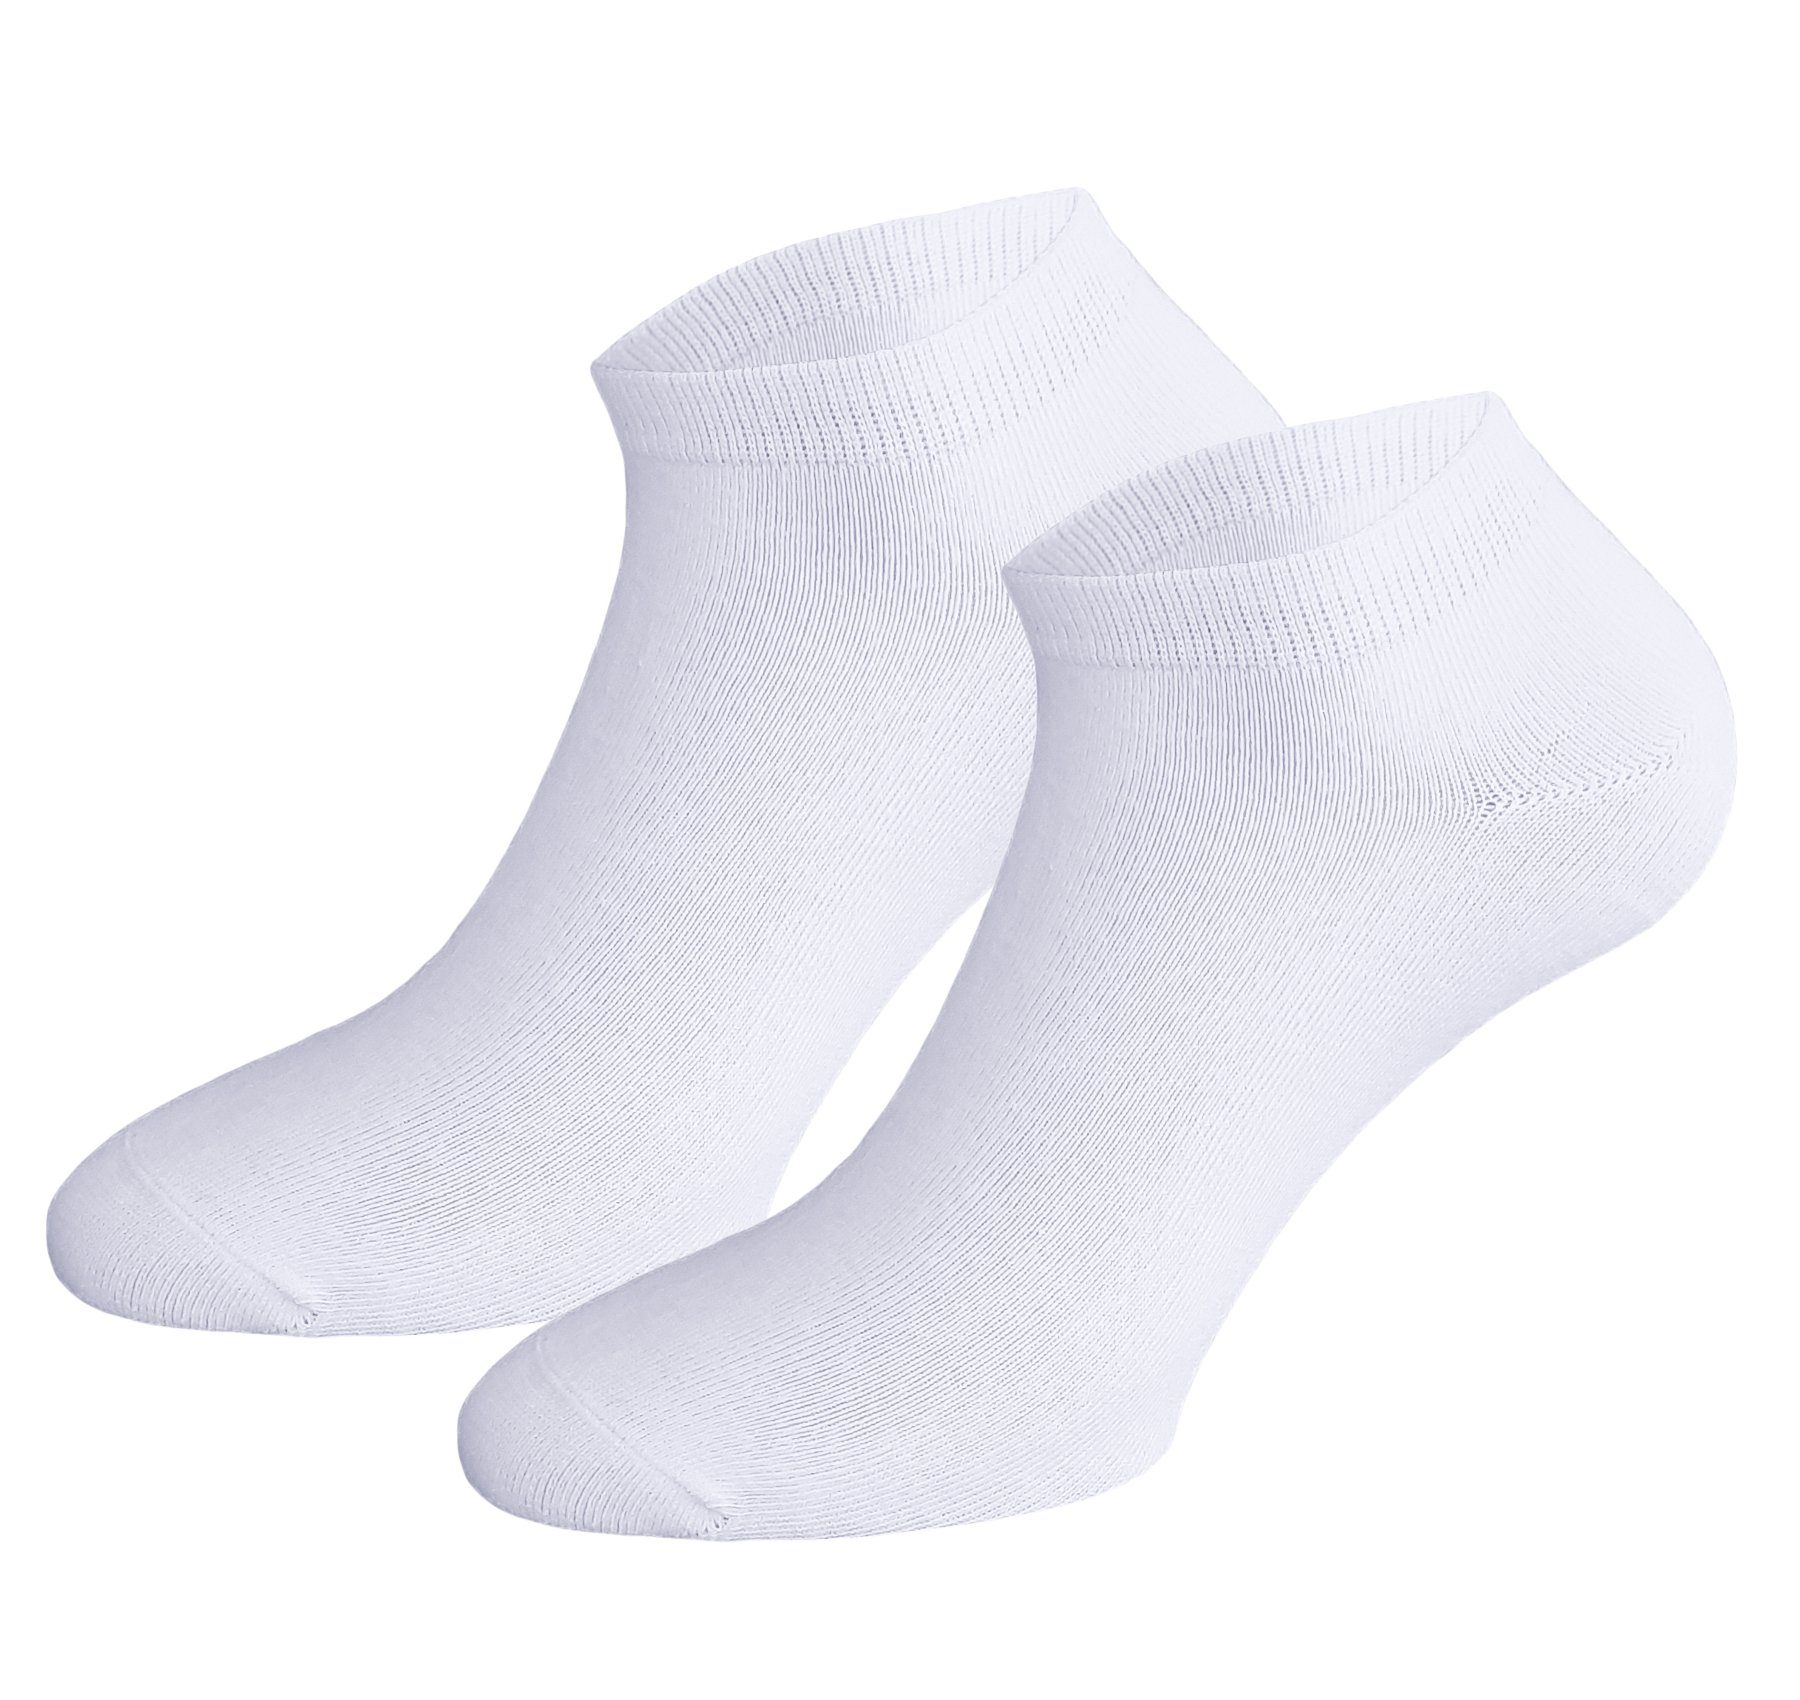 Sockenhimmel Sneakersocken Socken für Farben Sommersocken Paar) in maschinengekettelte Mix Naht Damen kurze (Weiß/Grau) (10 flach) Basic Sportsocken leichte (sehr